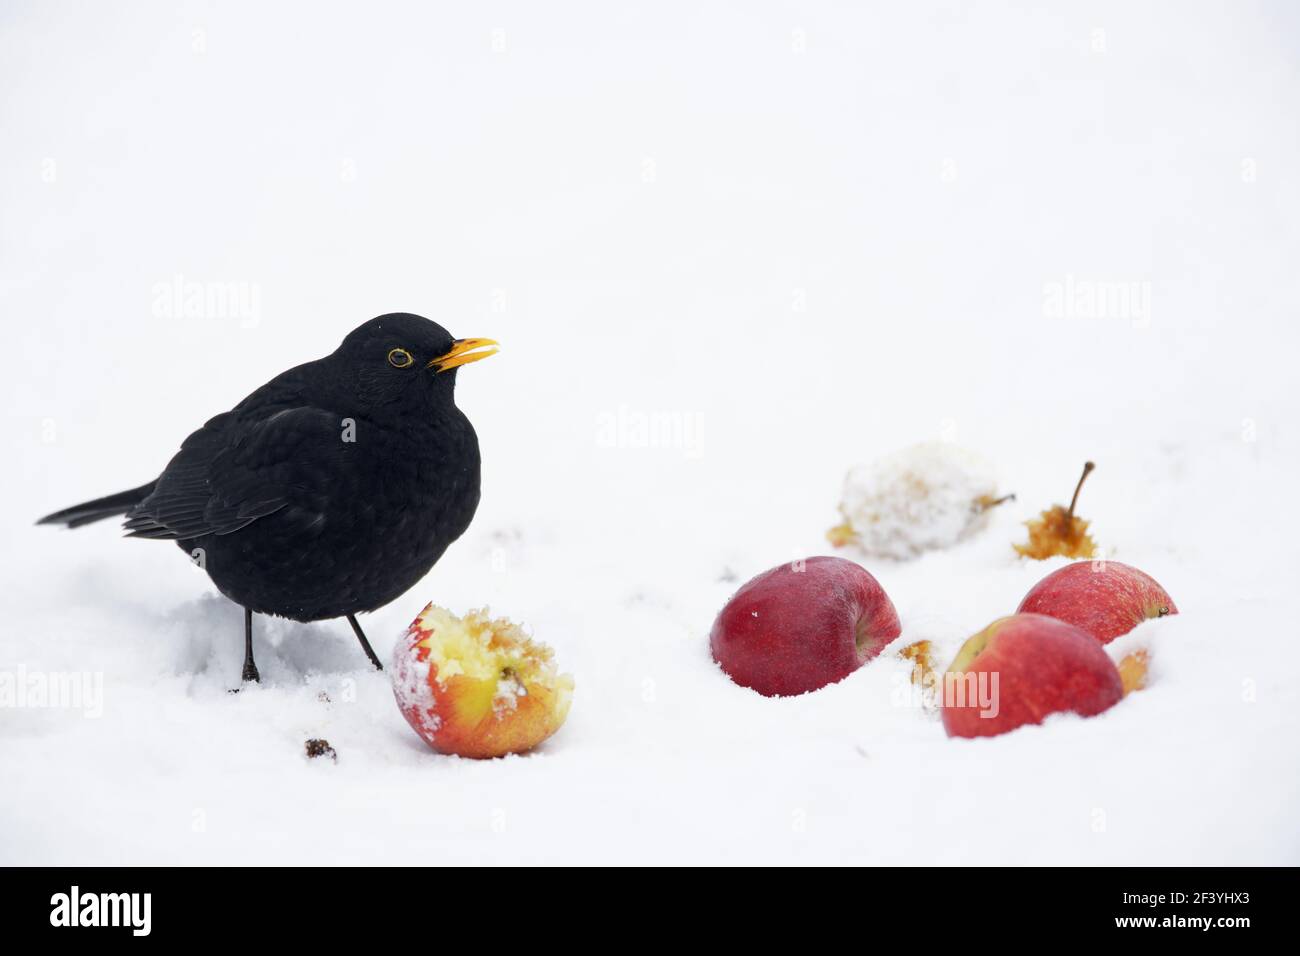 Blackbird - Male feeding on apples in snowTurdus merula Essex, UK BI019386 Stock Photo